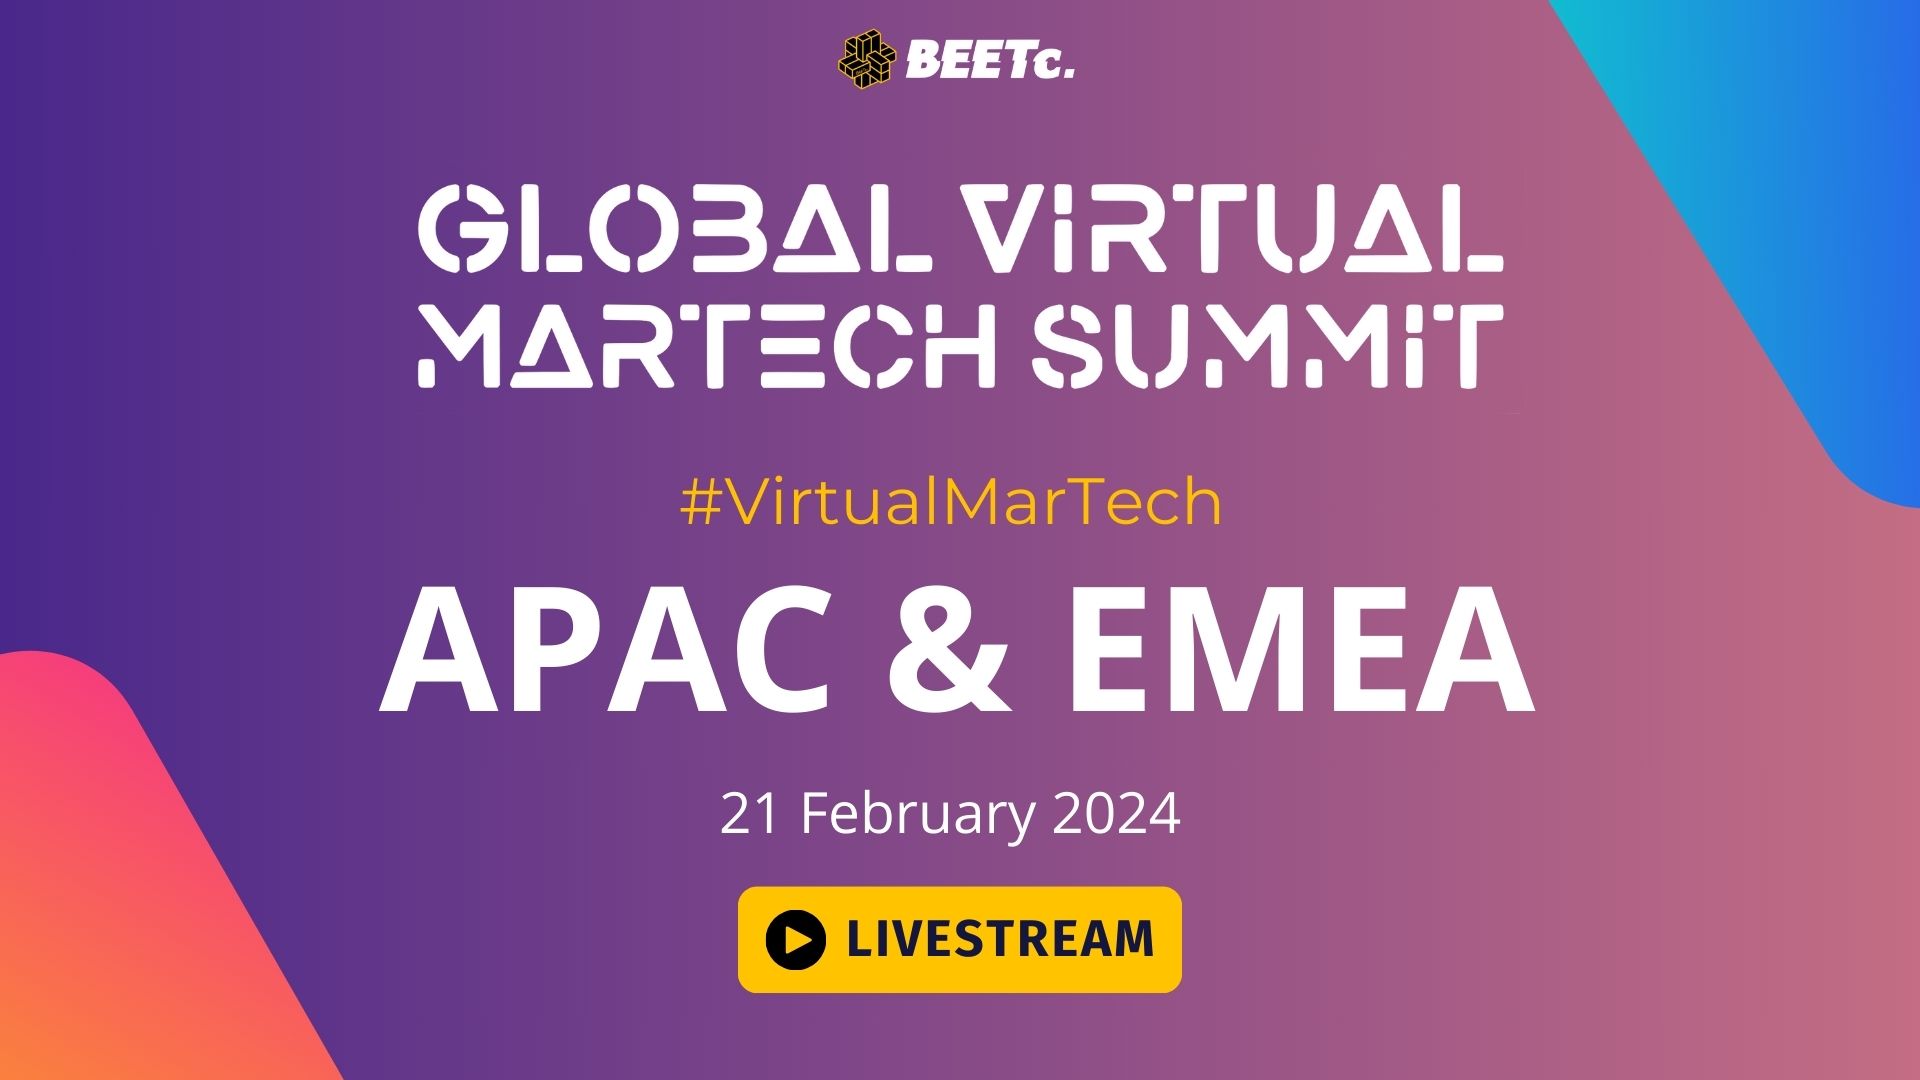 Launching Global Virtual MarTech Summit APAC & EMEA, February 2024